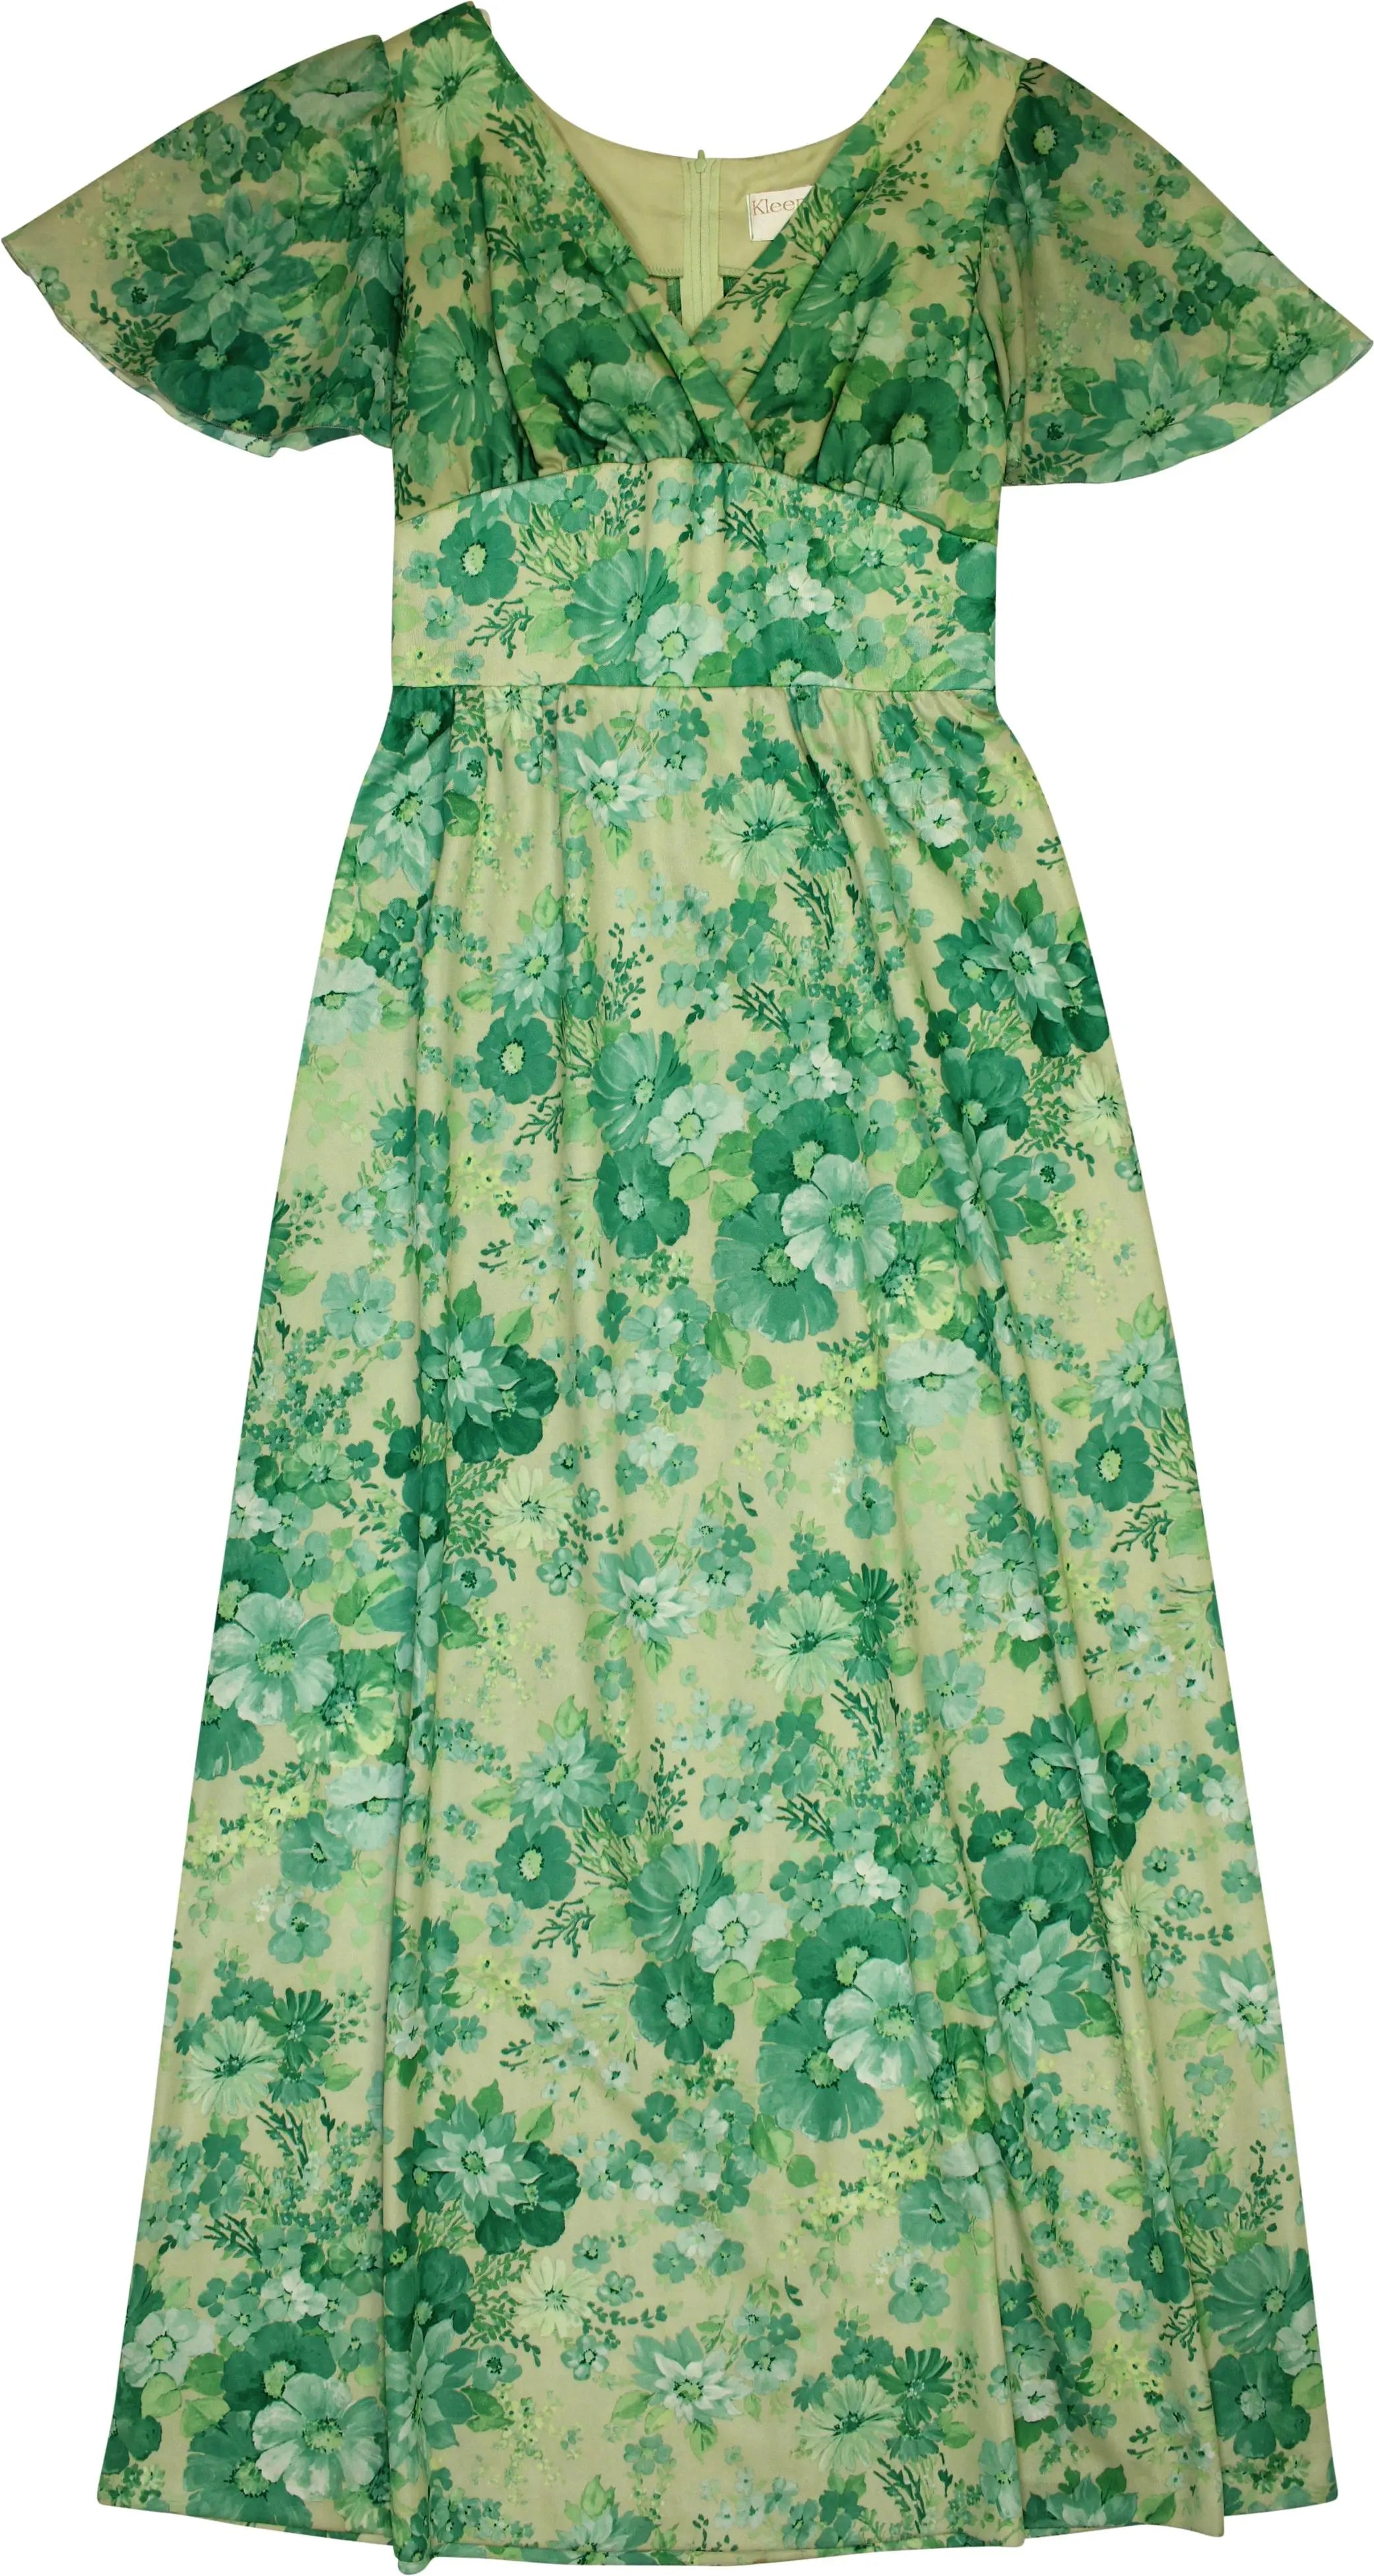 Kleemeier Hof - 70s Floral Dress- ThriftTale.com - Vintage and second handclothing